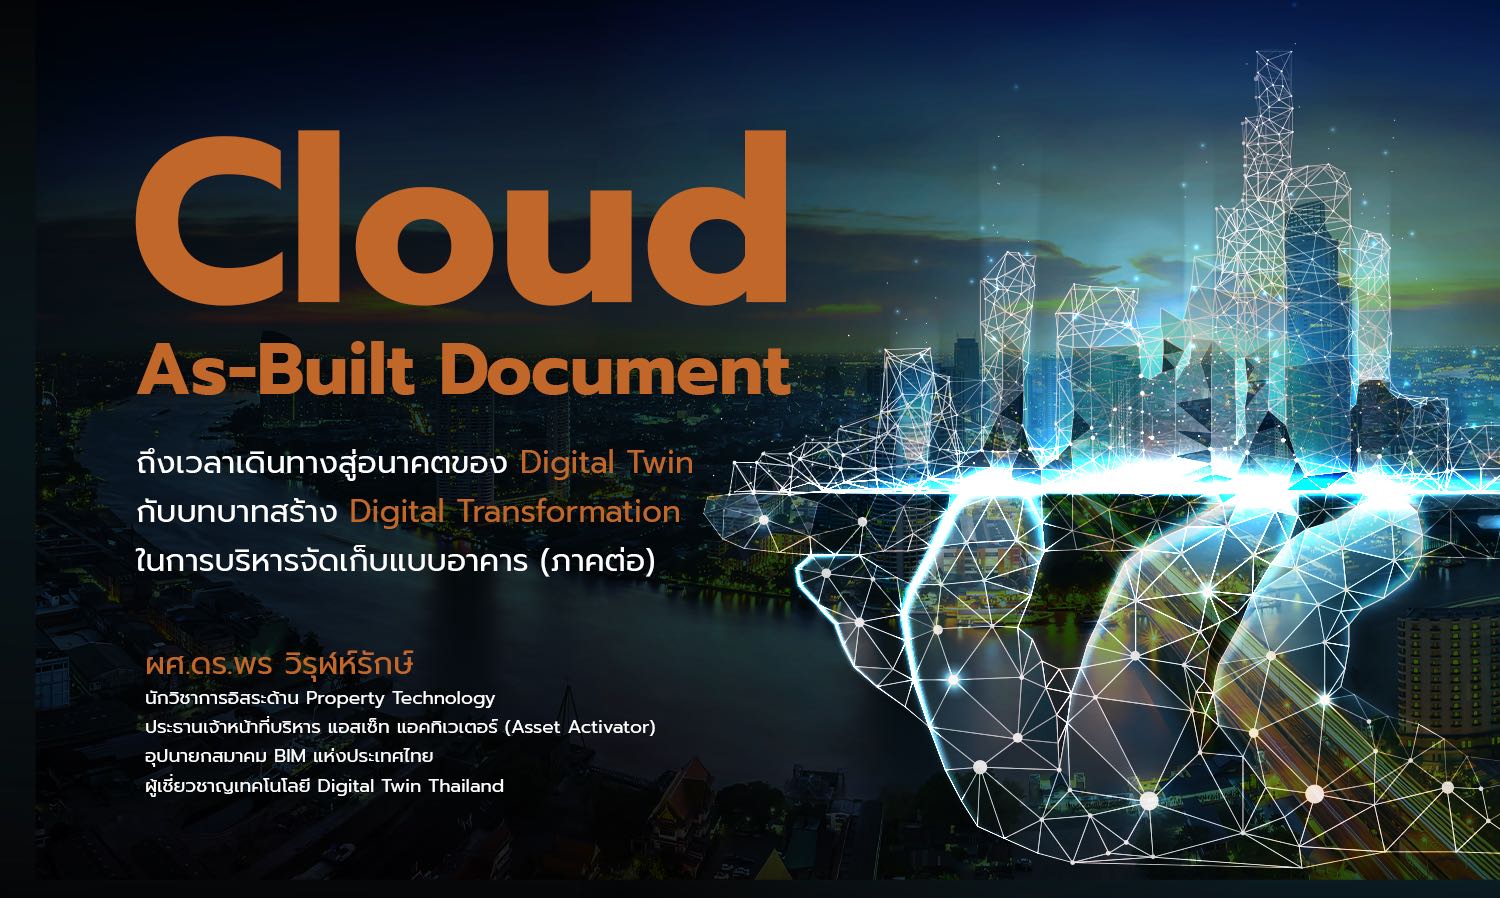 cloud-as-built-document-ถึงเวลาเดินทางสู่อนาคตของ-digital-twin-กับบทบาทสร้าง-digital-transformation-ในการบริหารจัดเก็บแบบอาคาร-ภาคต่อ-